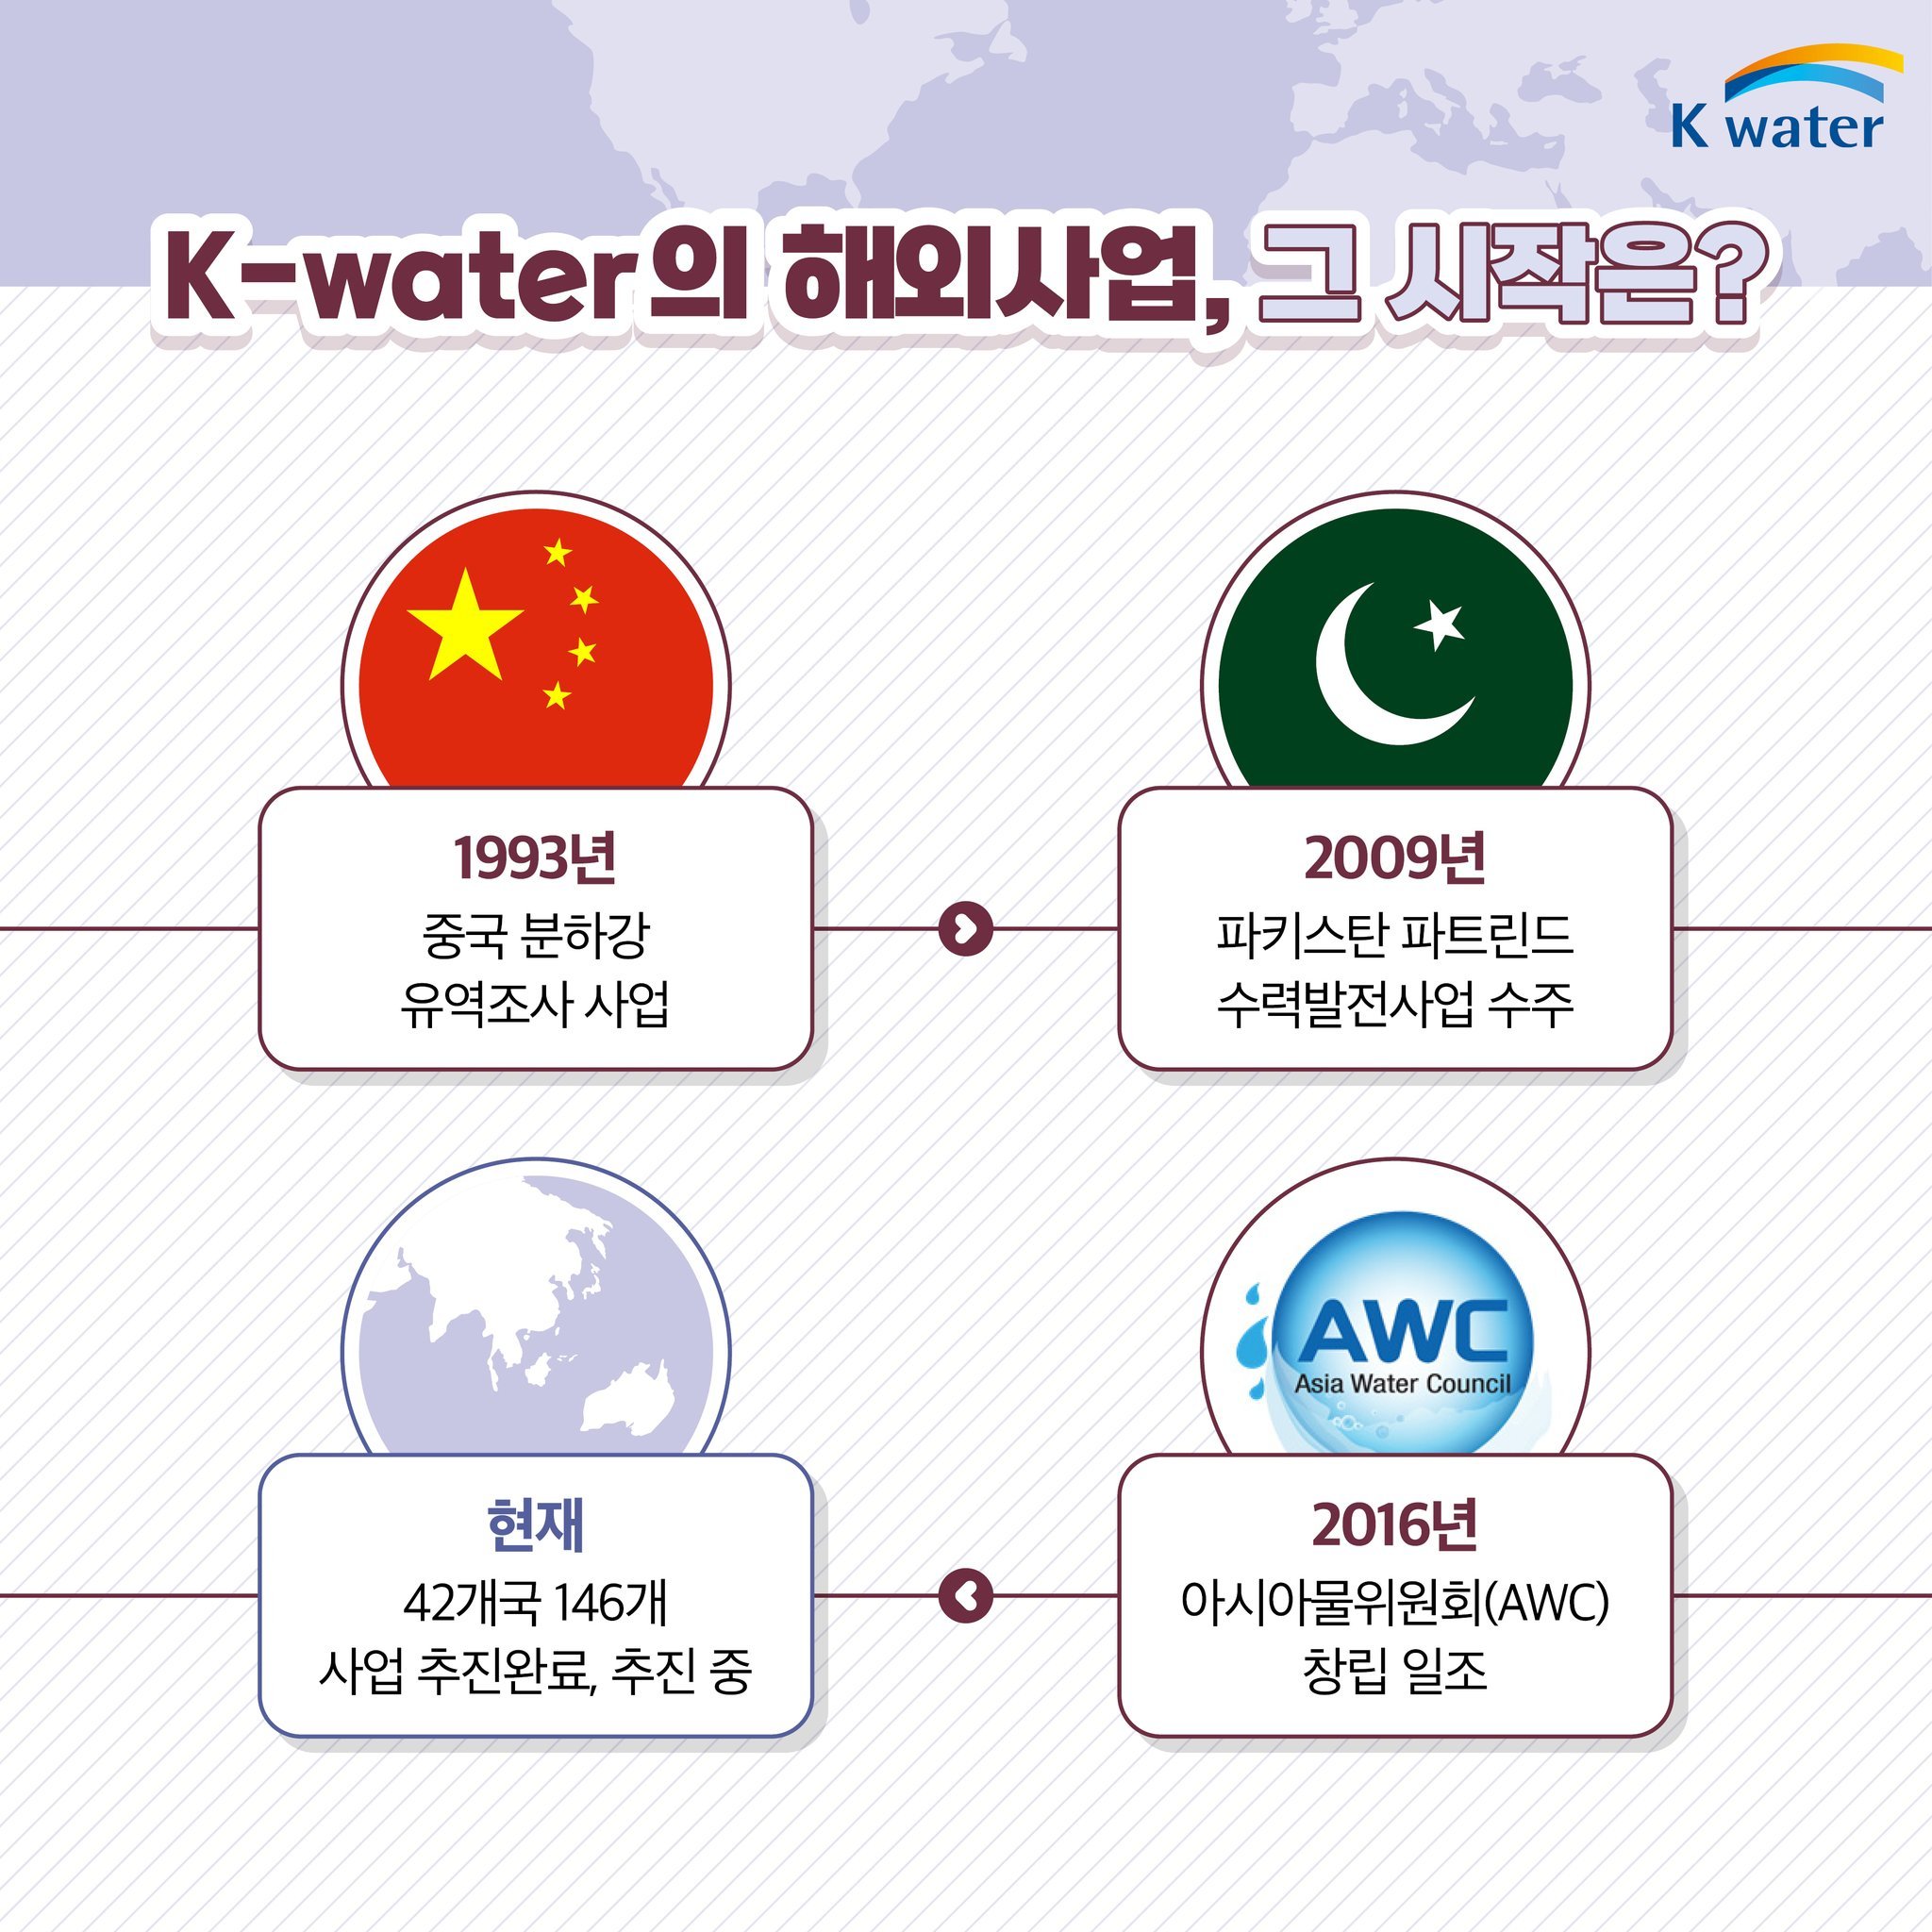 K-water의 해외사업, 그 시작은? 1933년 중국 분하강 유역조사 사업 - 2009년 파키스탄 파트린드 수력발전사업 수주 - 2016년 아시아물위원회(AWC) 창립 일조 - 현재 42개국 146개 사업 추진완료, 추진 중